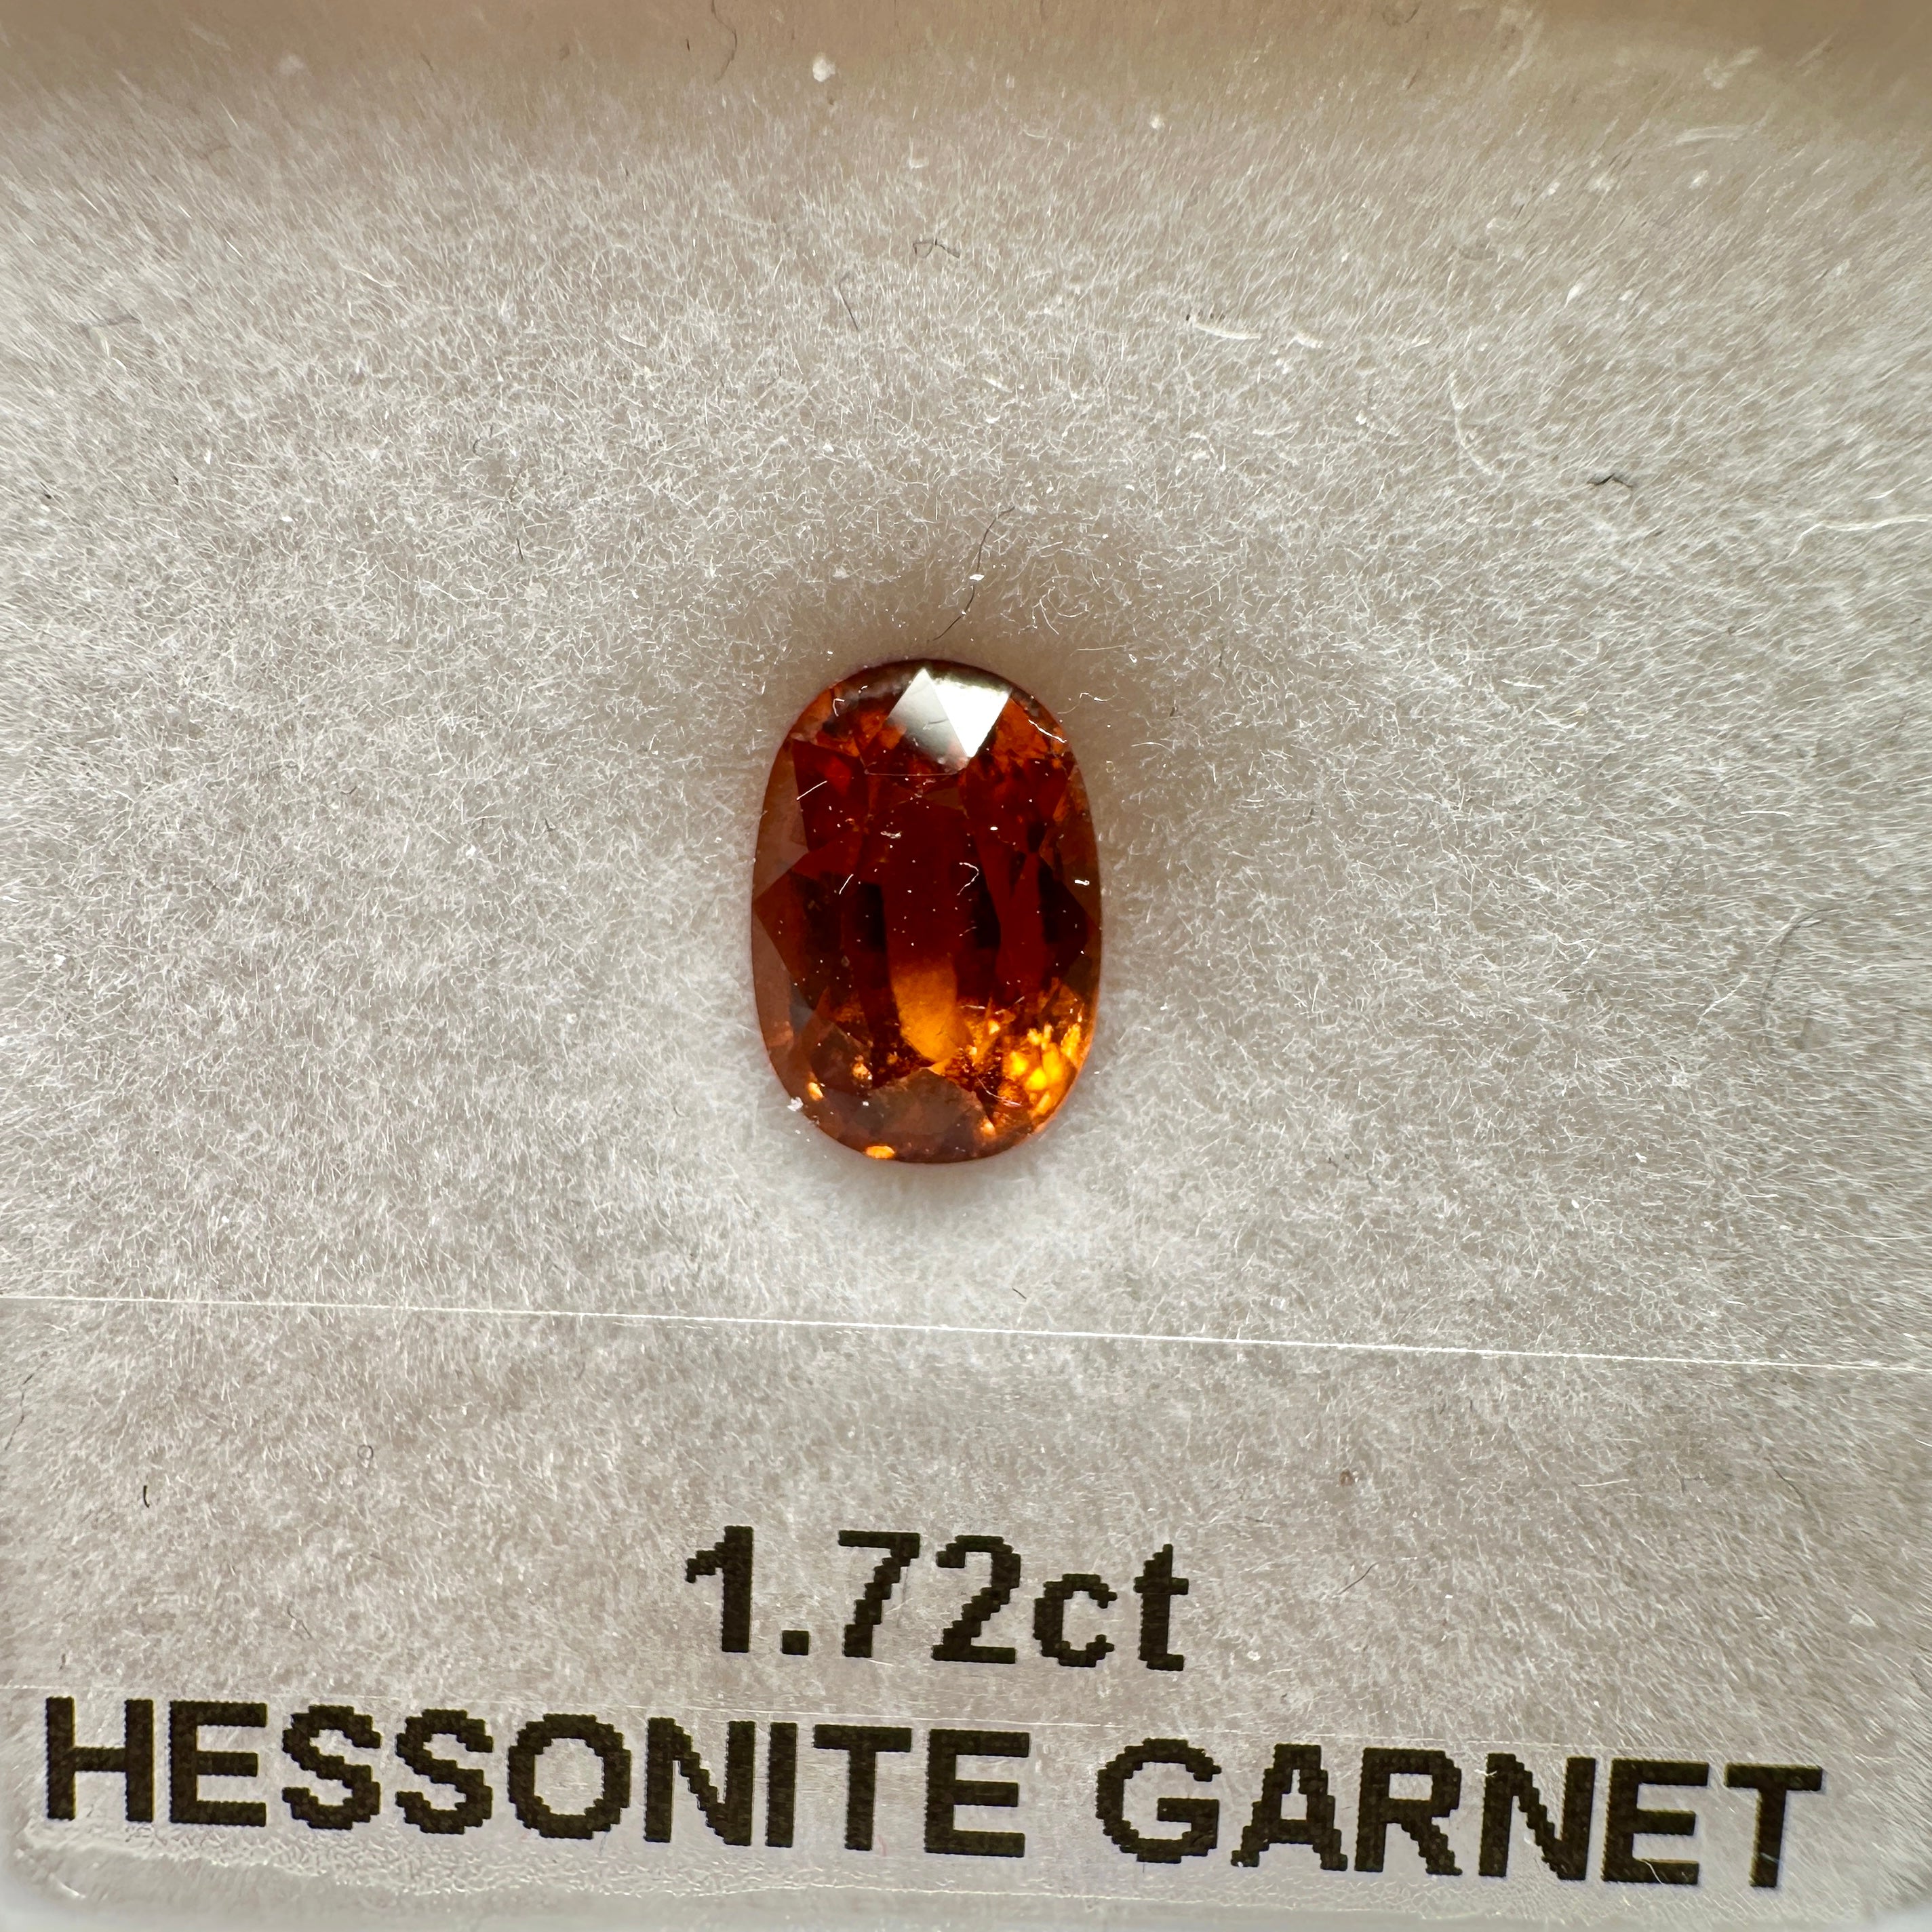 1.72ct Hessonite Garnet, Untreated Unheated, native cut